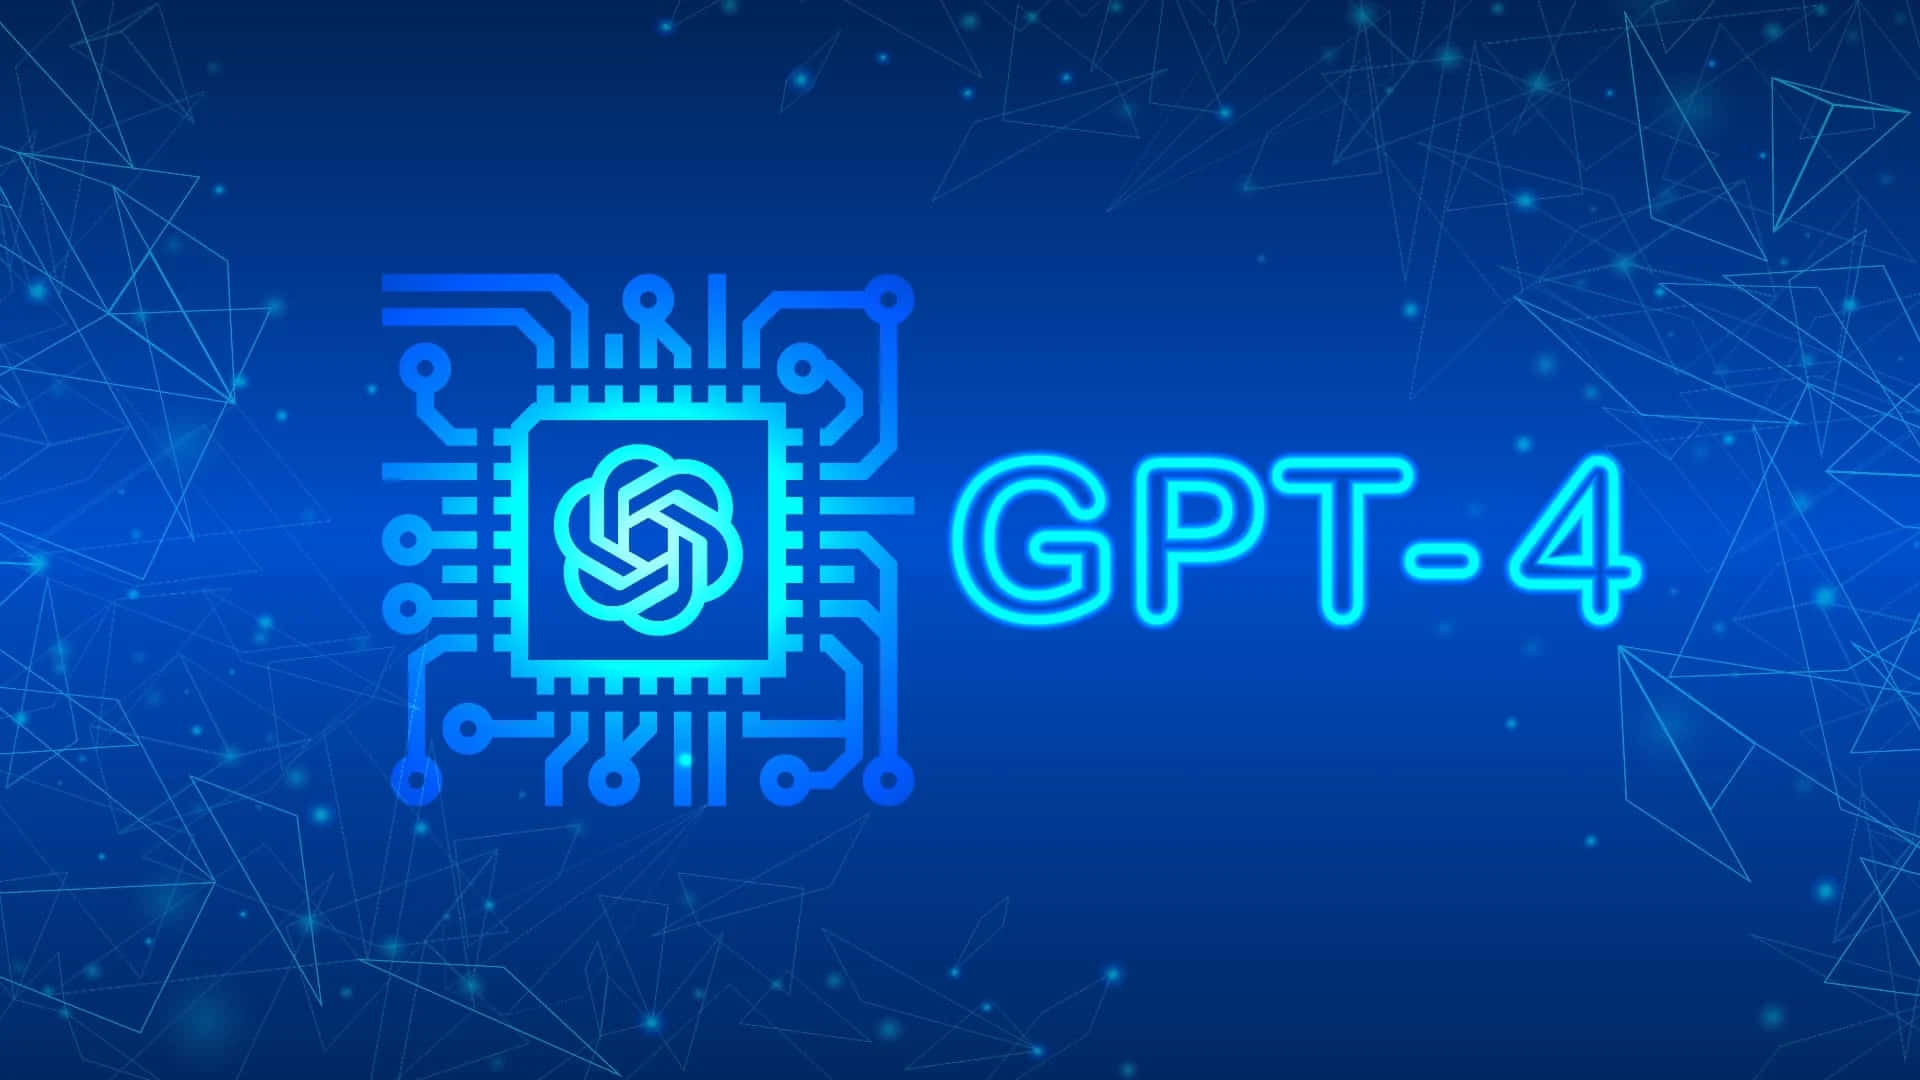 GPT-4, the breakthrough AI language model Wallpaper